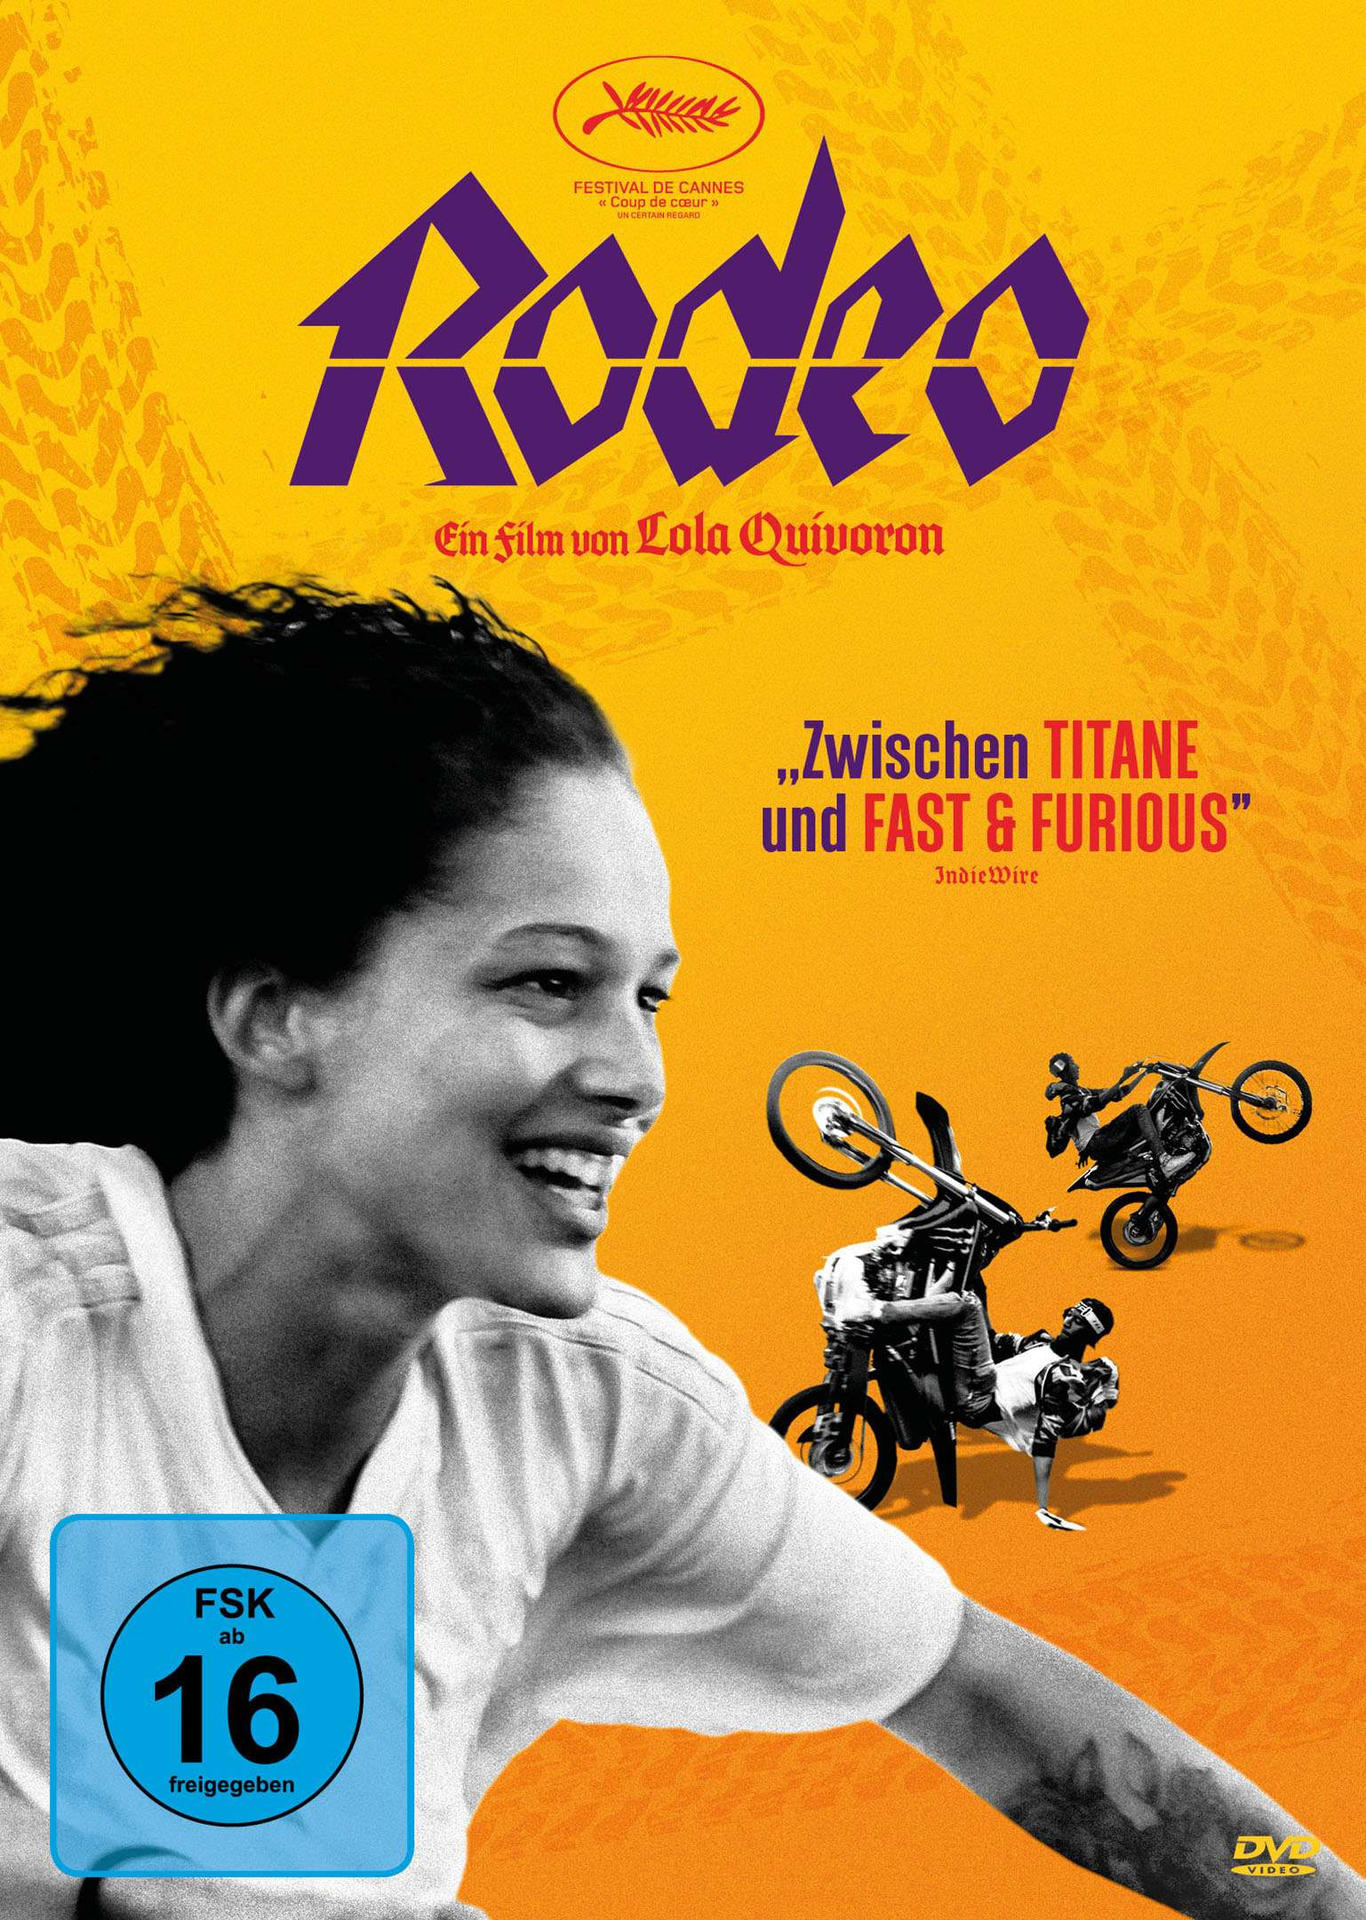 Rodeo DVD